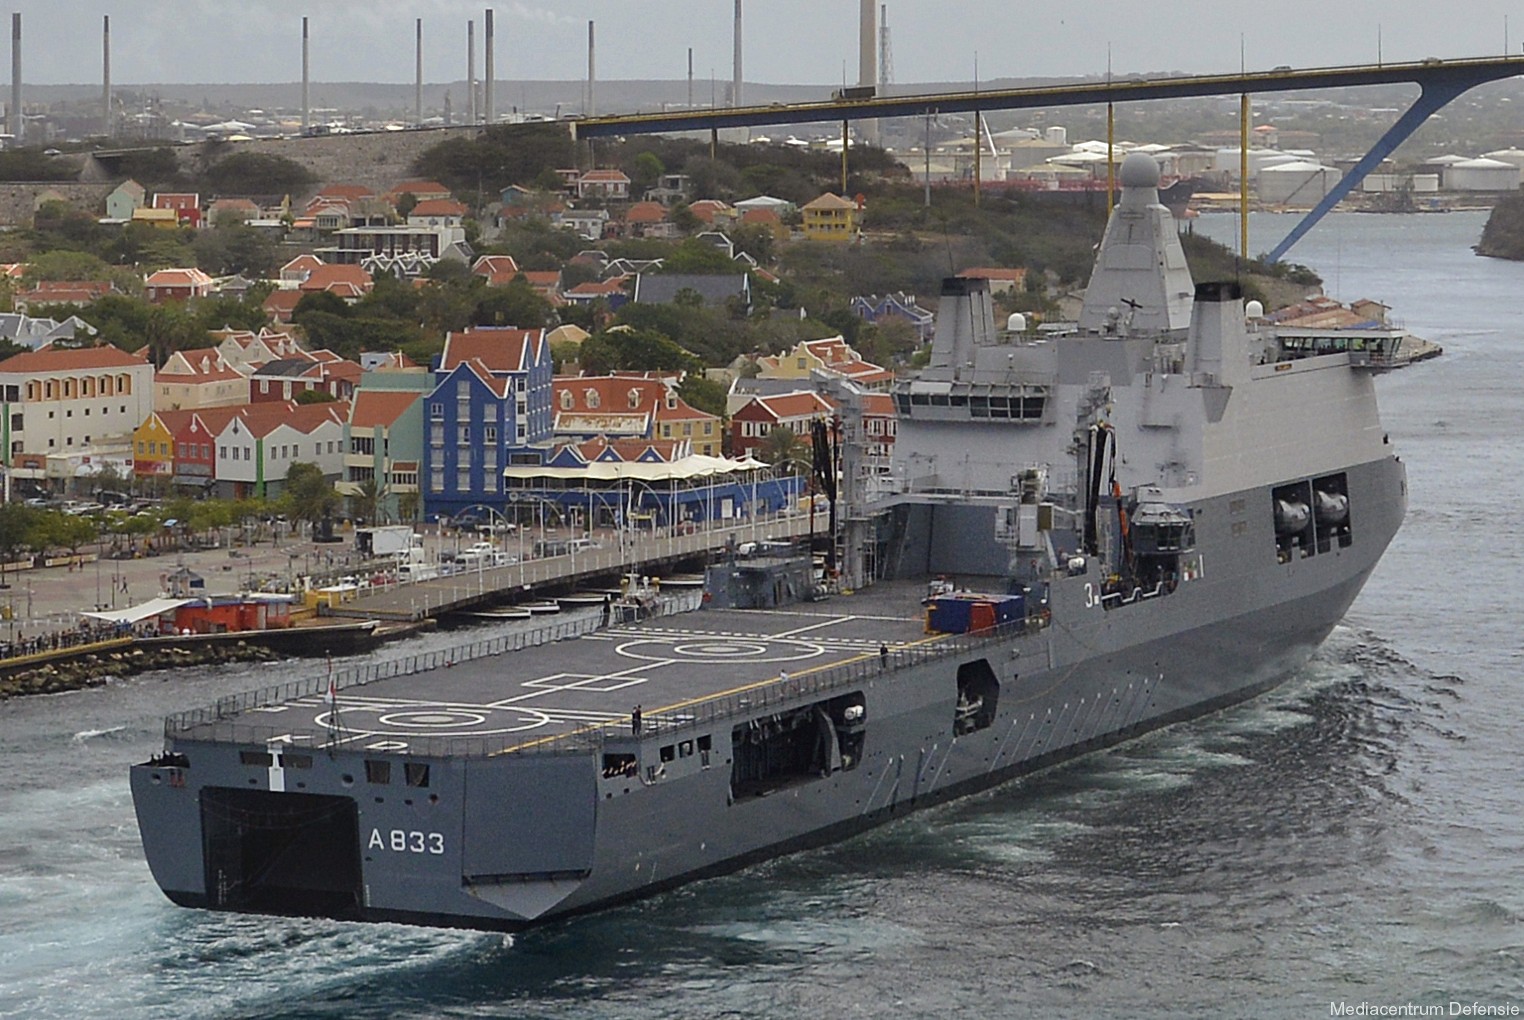 a-833 hnlms karel doorman joint support ship royal netherlands navy koninklijke marine 23